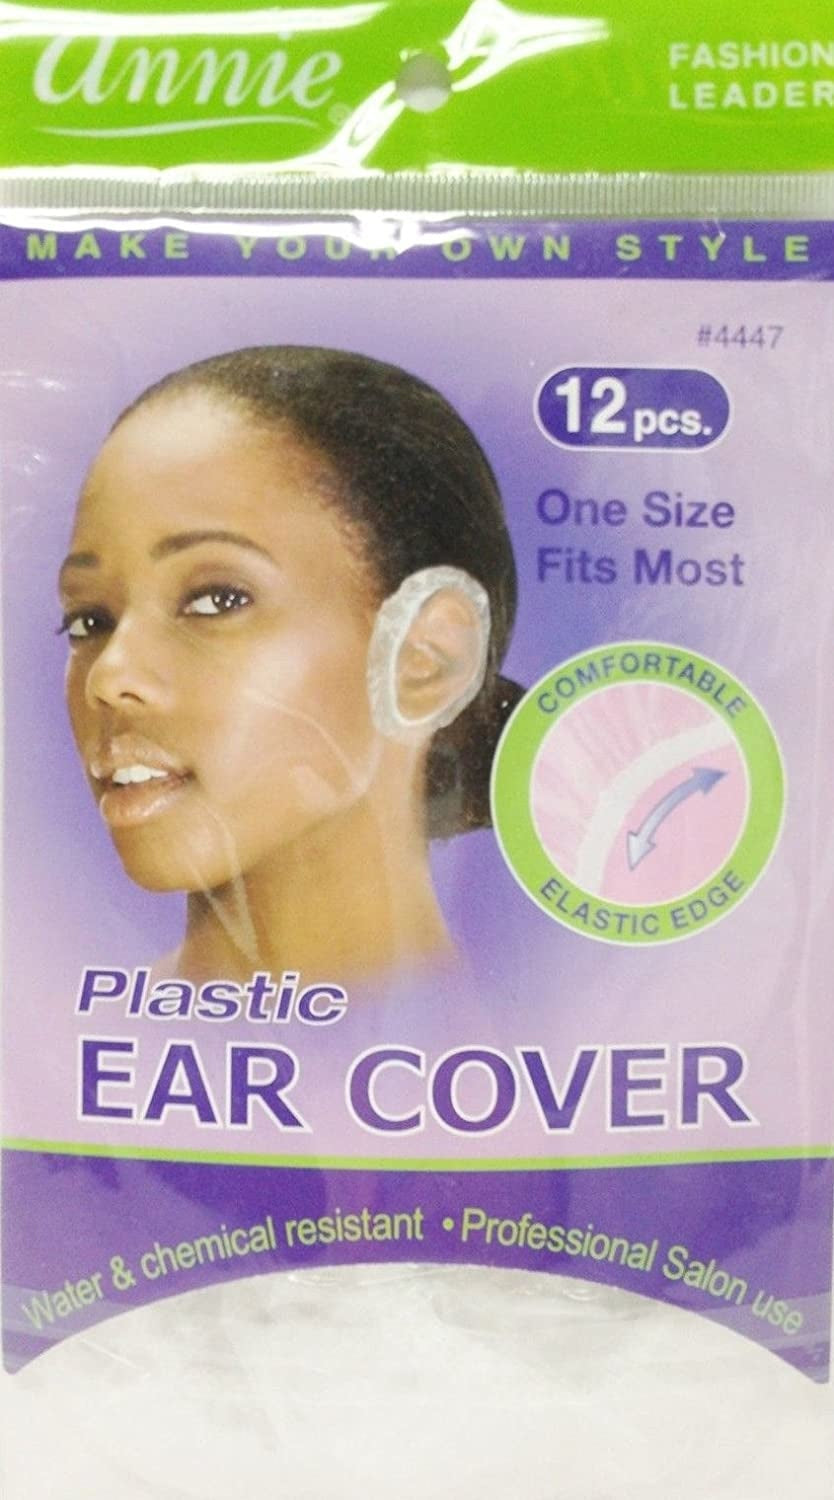 Plastic Ear Cover